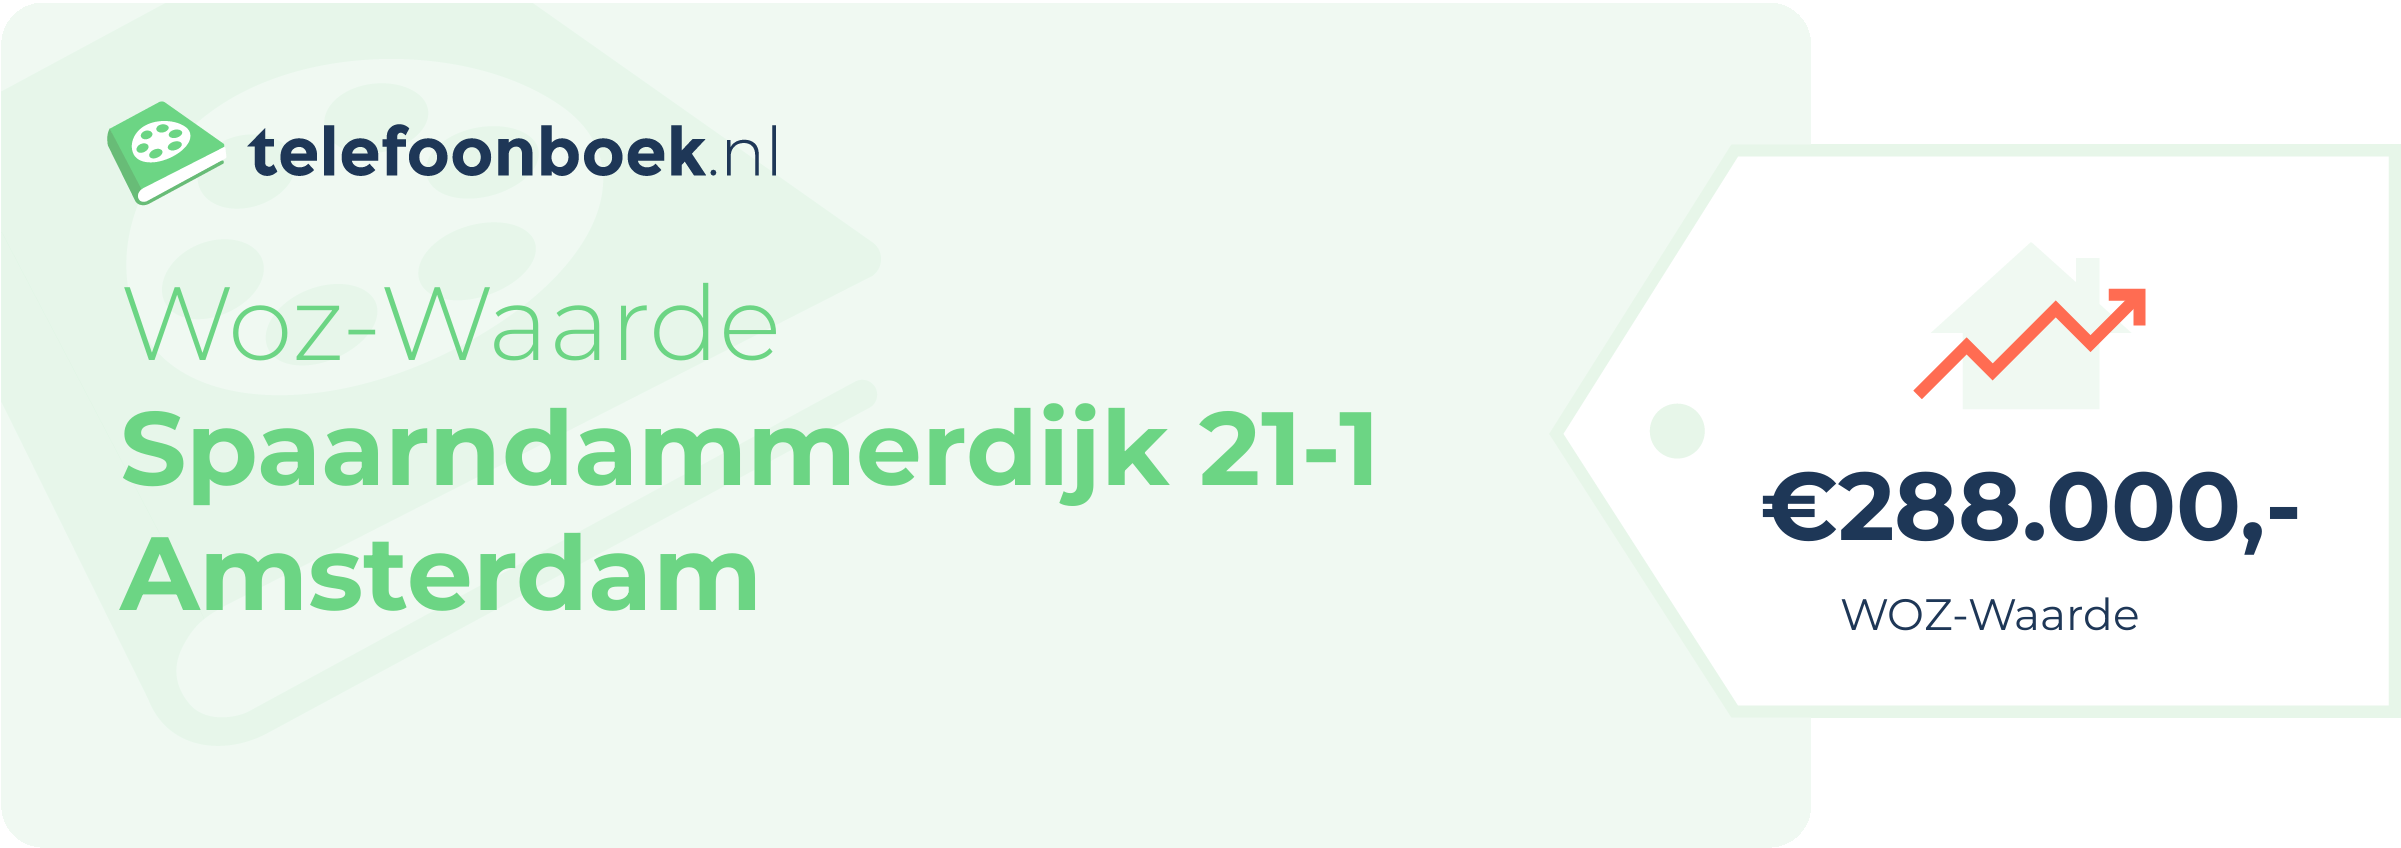 WOZ-waarde Spaarndammerdijk 21-1 Amsterdam